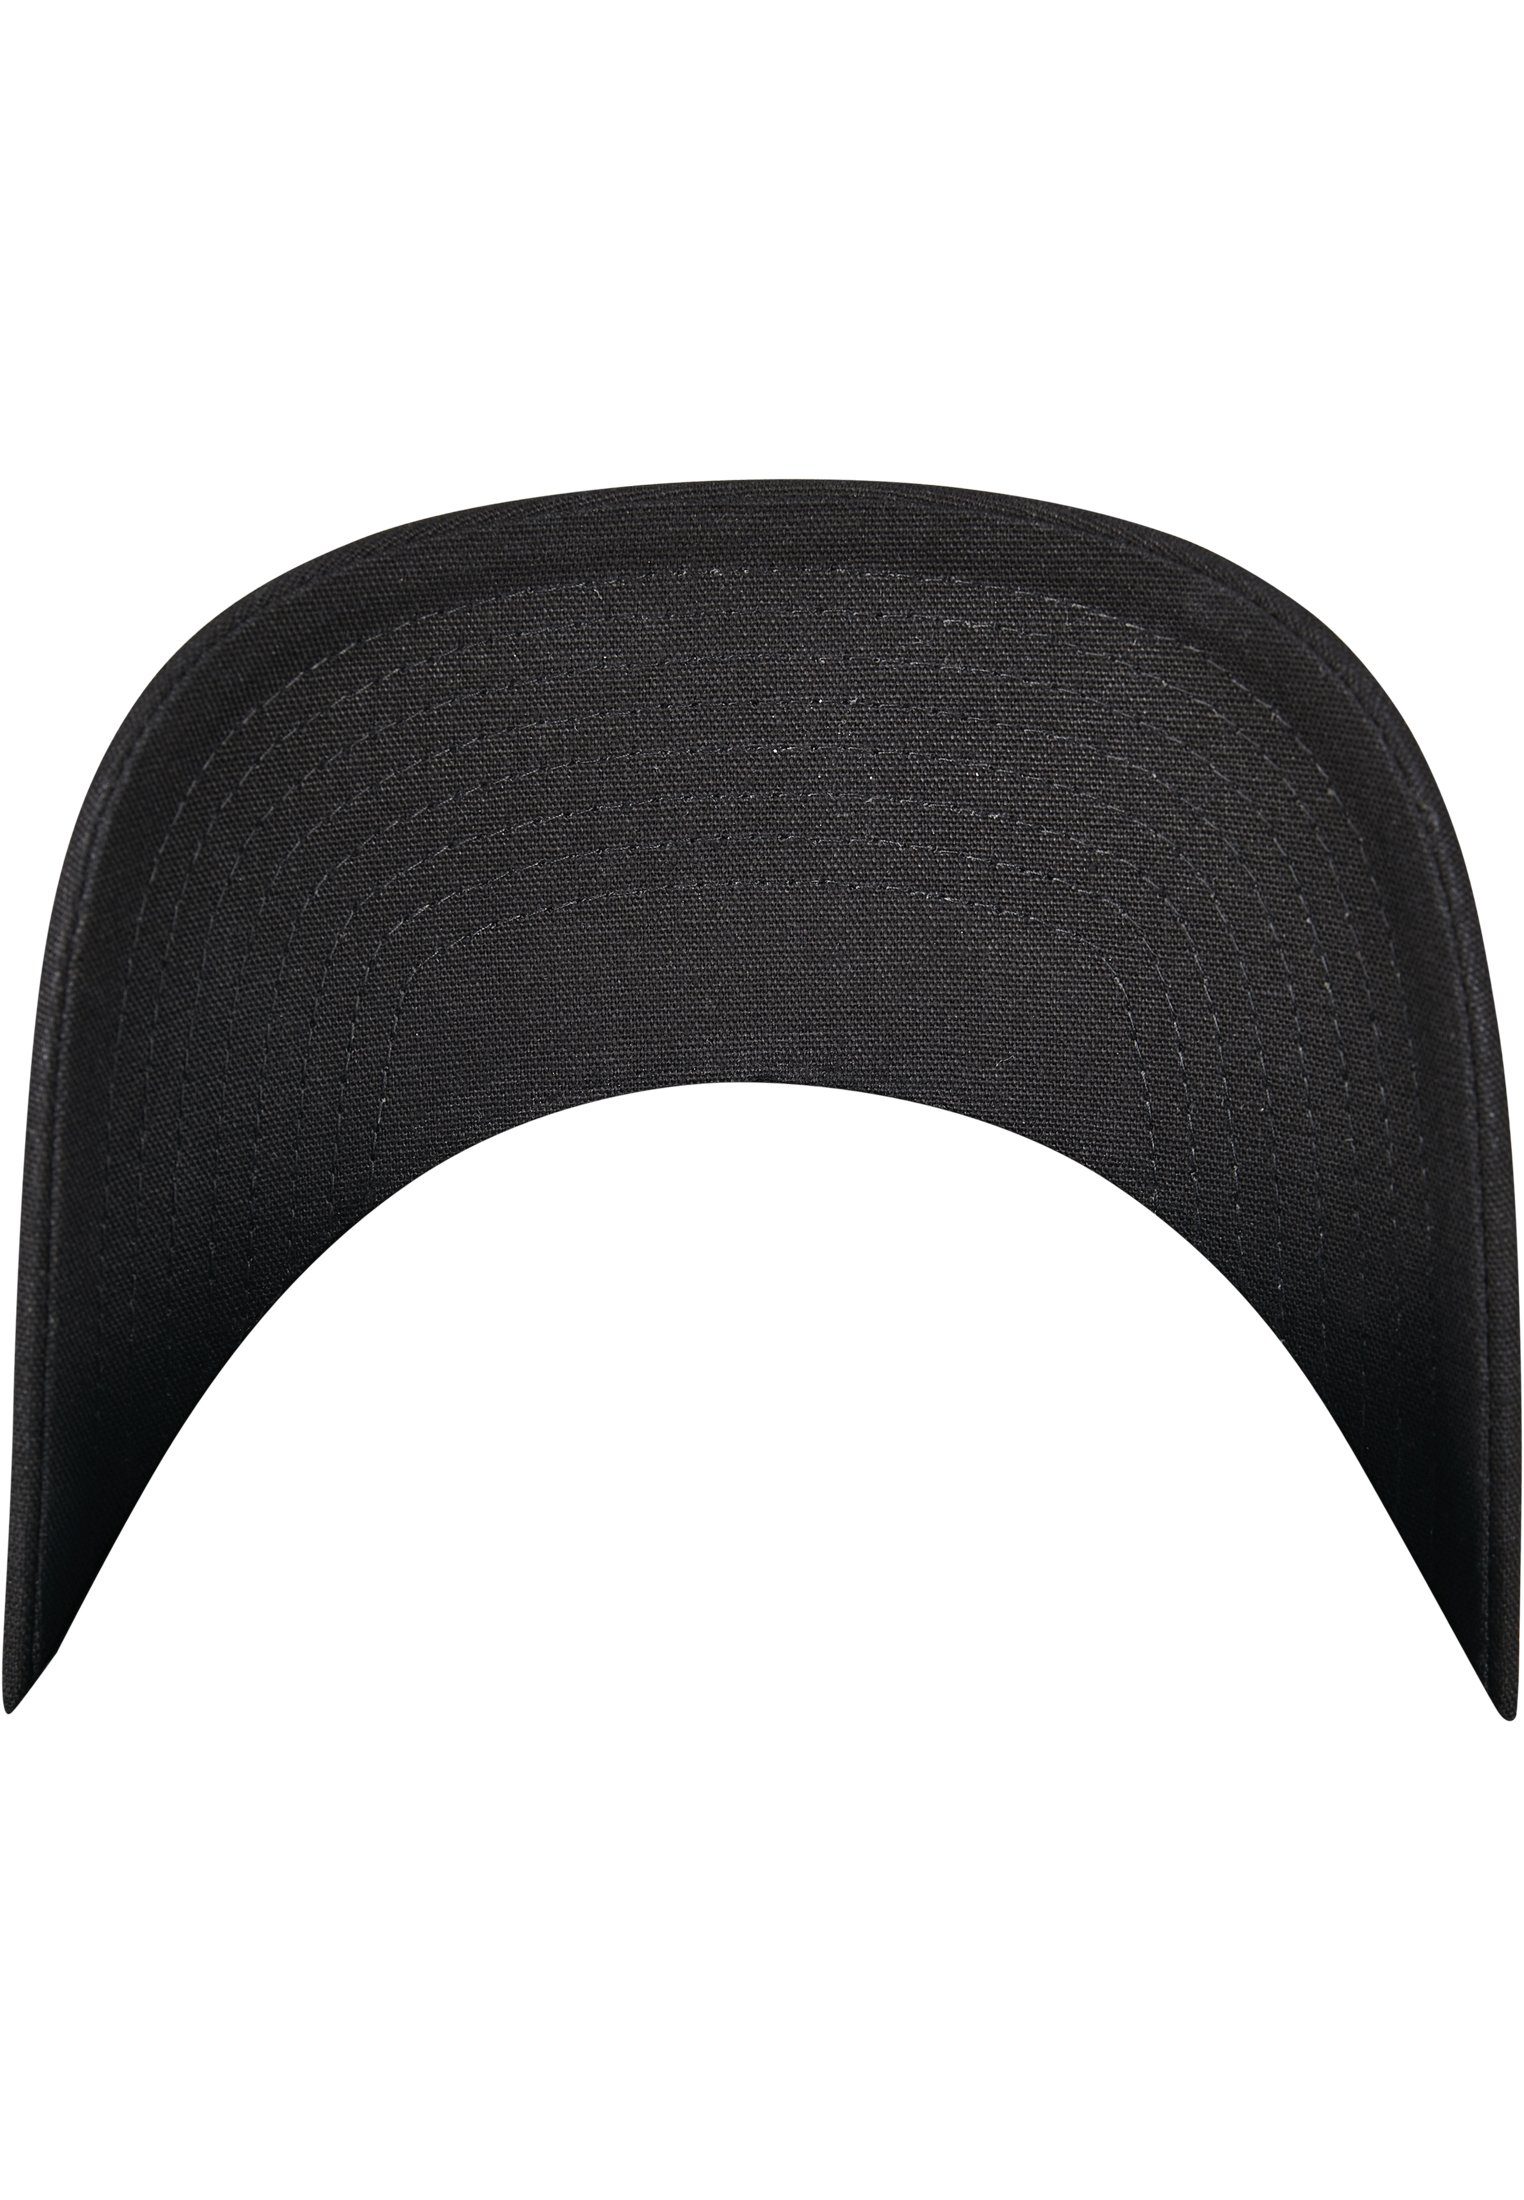 black Cap Flex Snap Snapback 6-Panel Flexfit Curved Metal